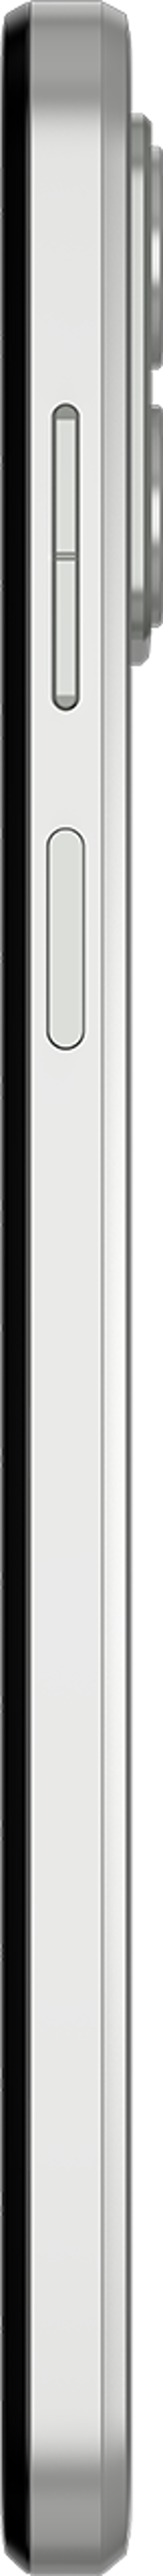 Motorola Moto G23 128GB Dual-SIM Vit